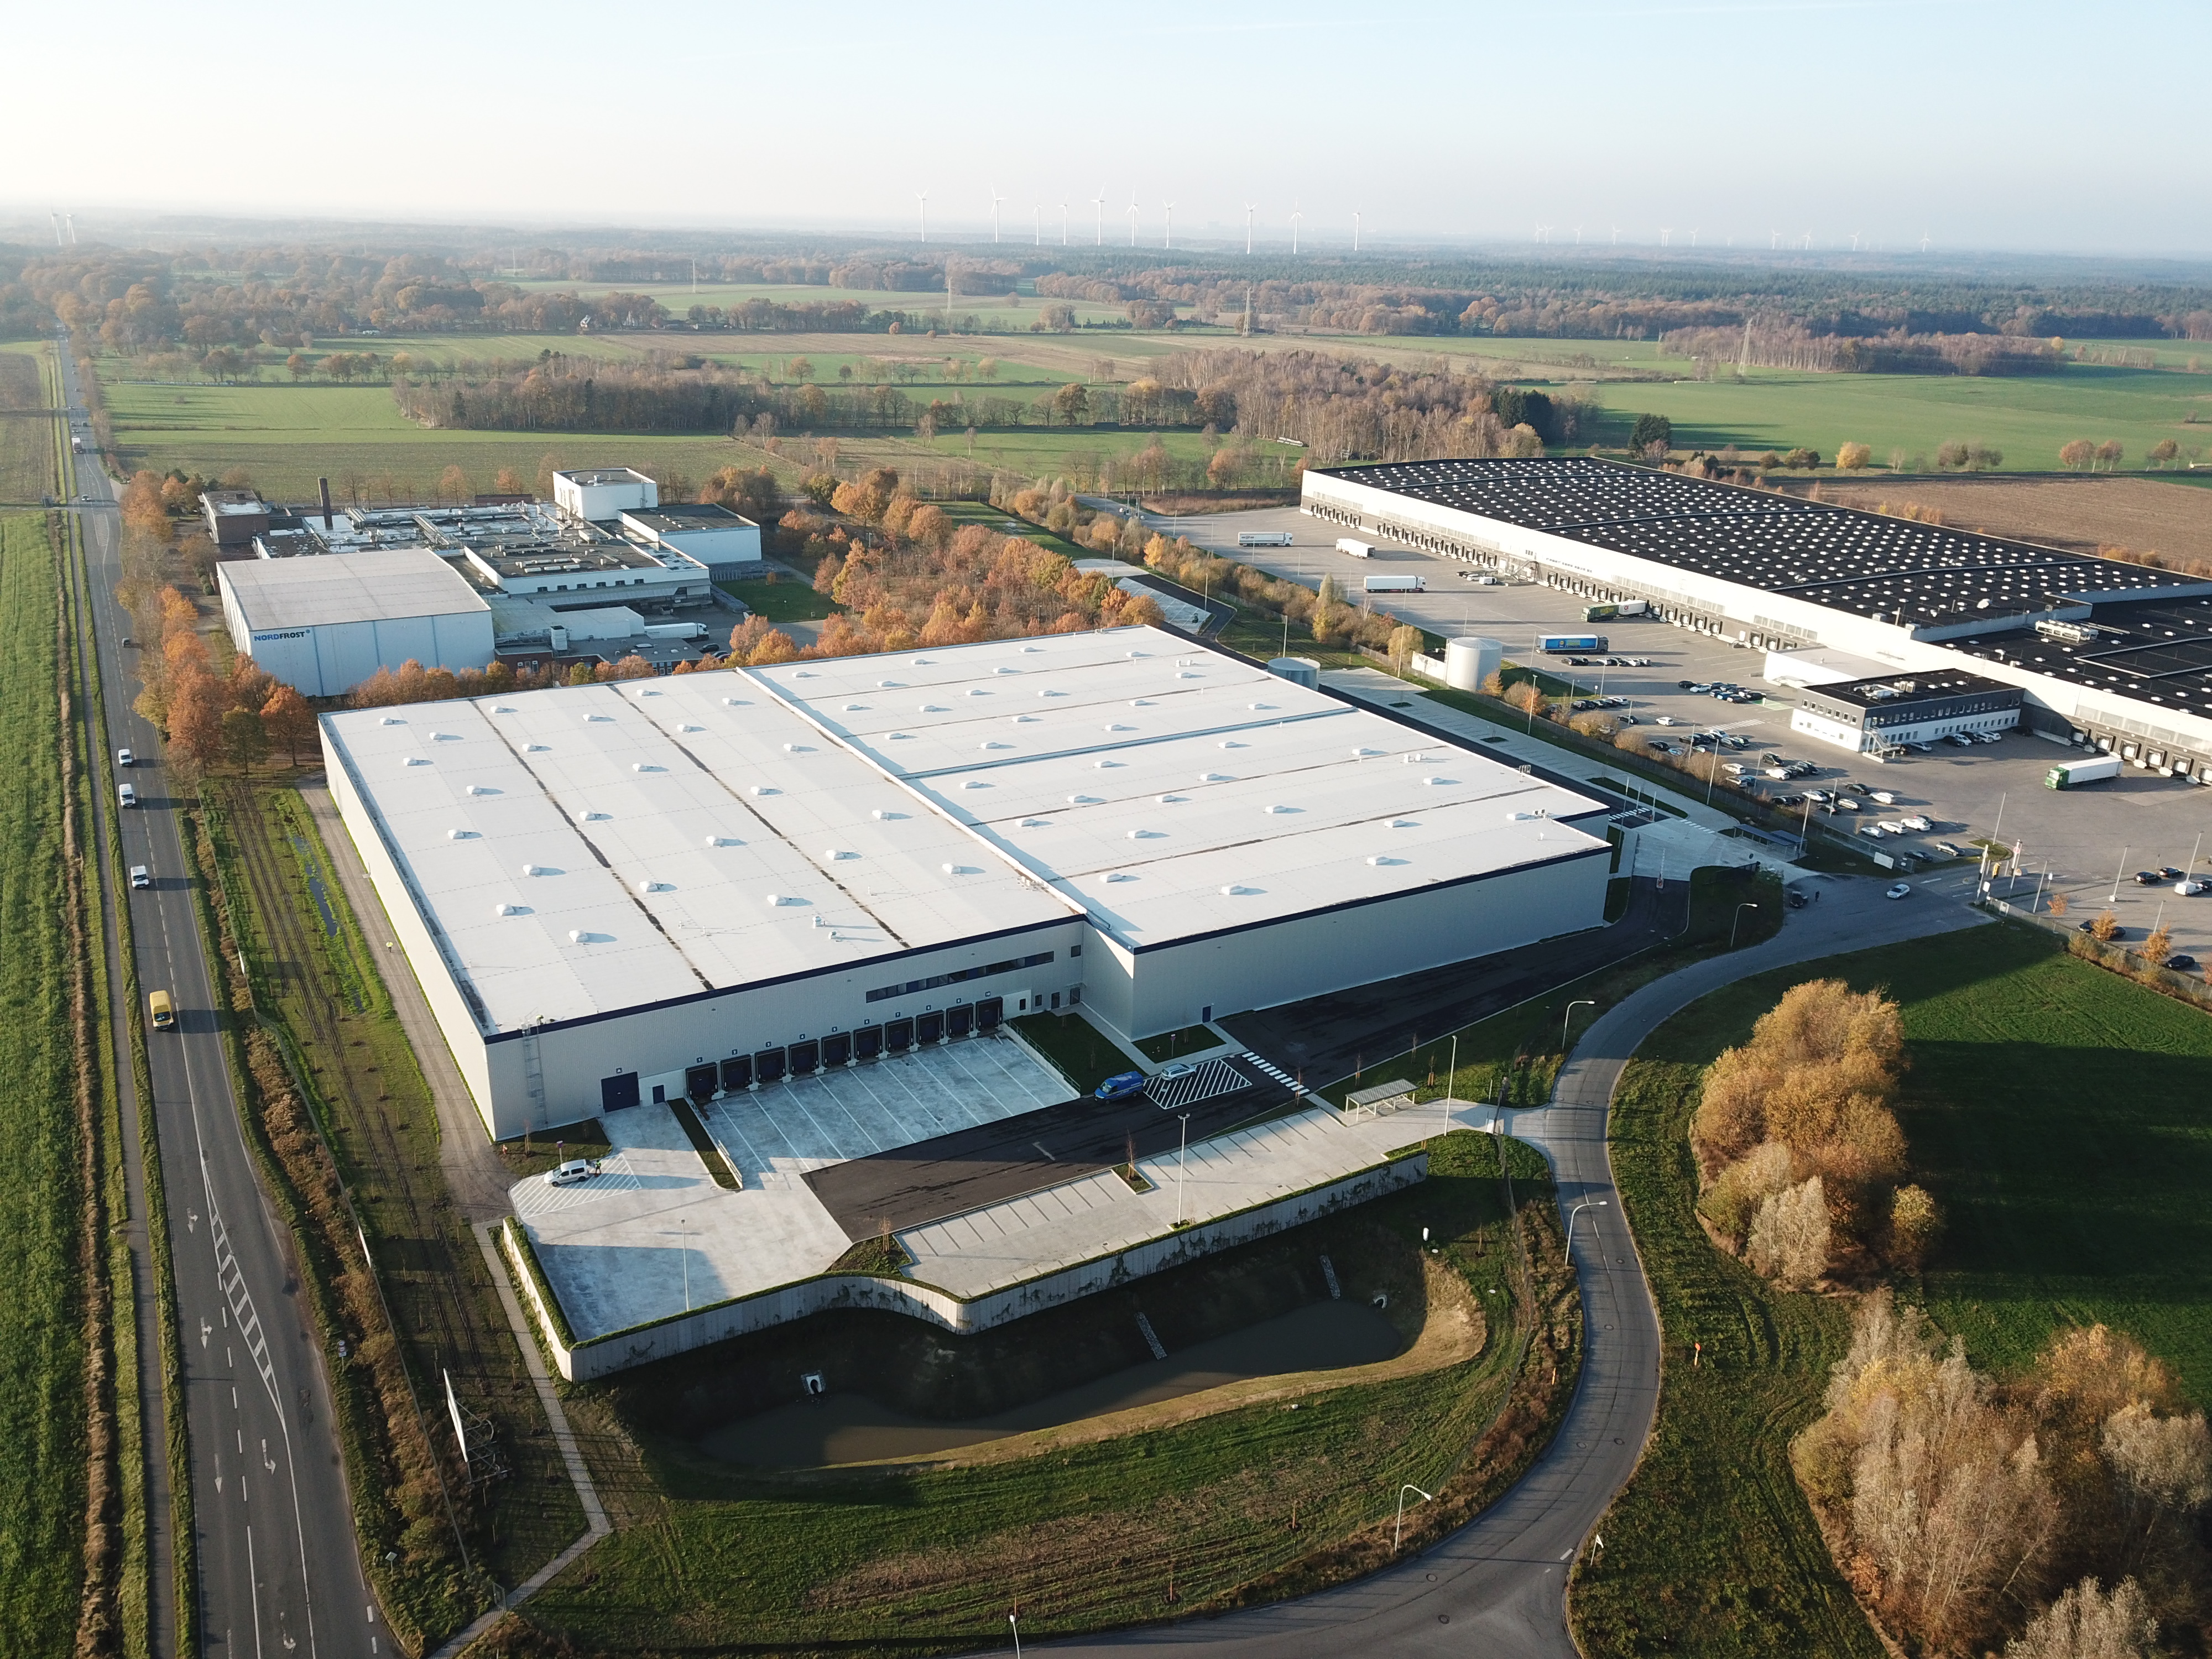 Bremen - Aerial view of warehouse showing field around it